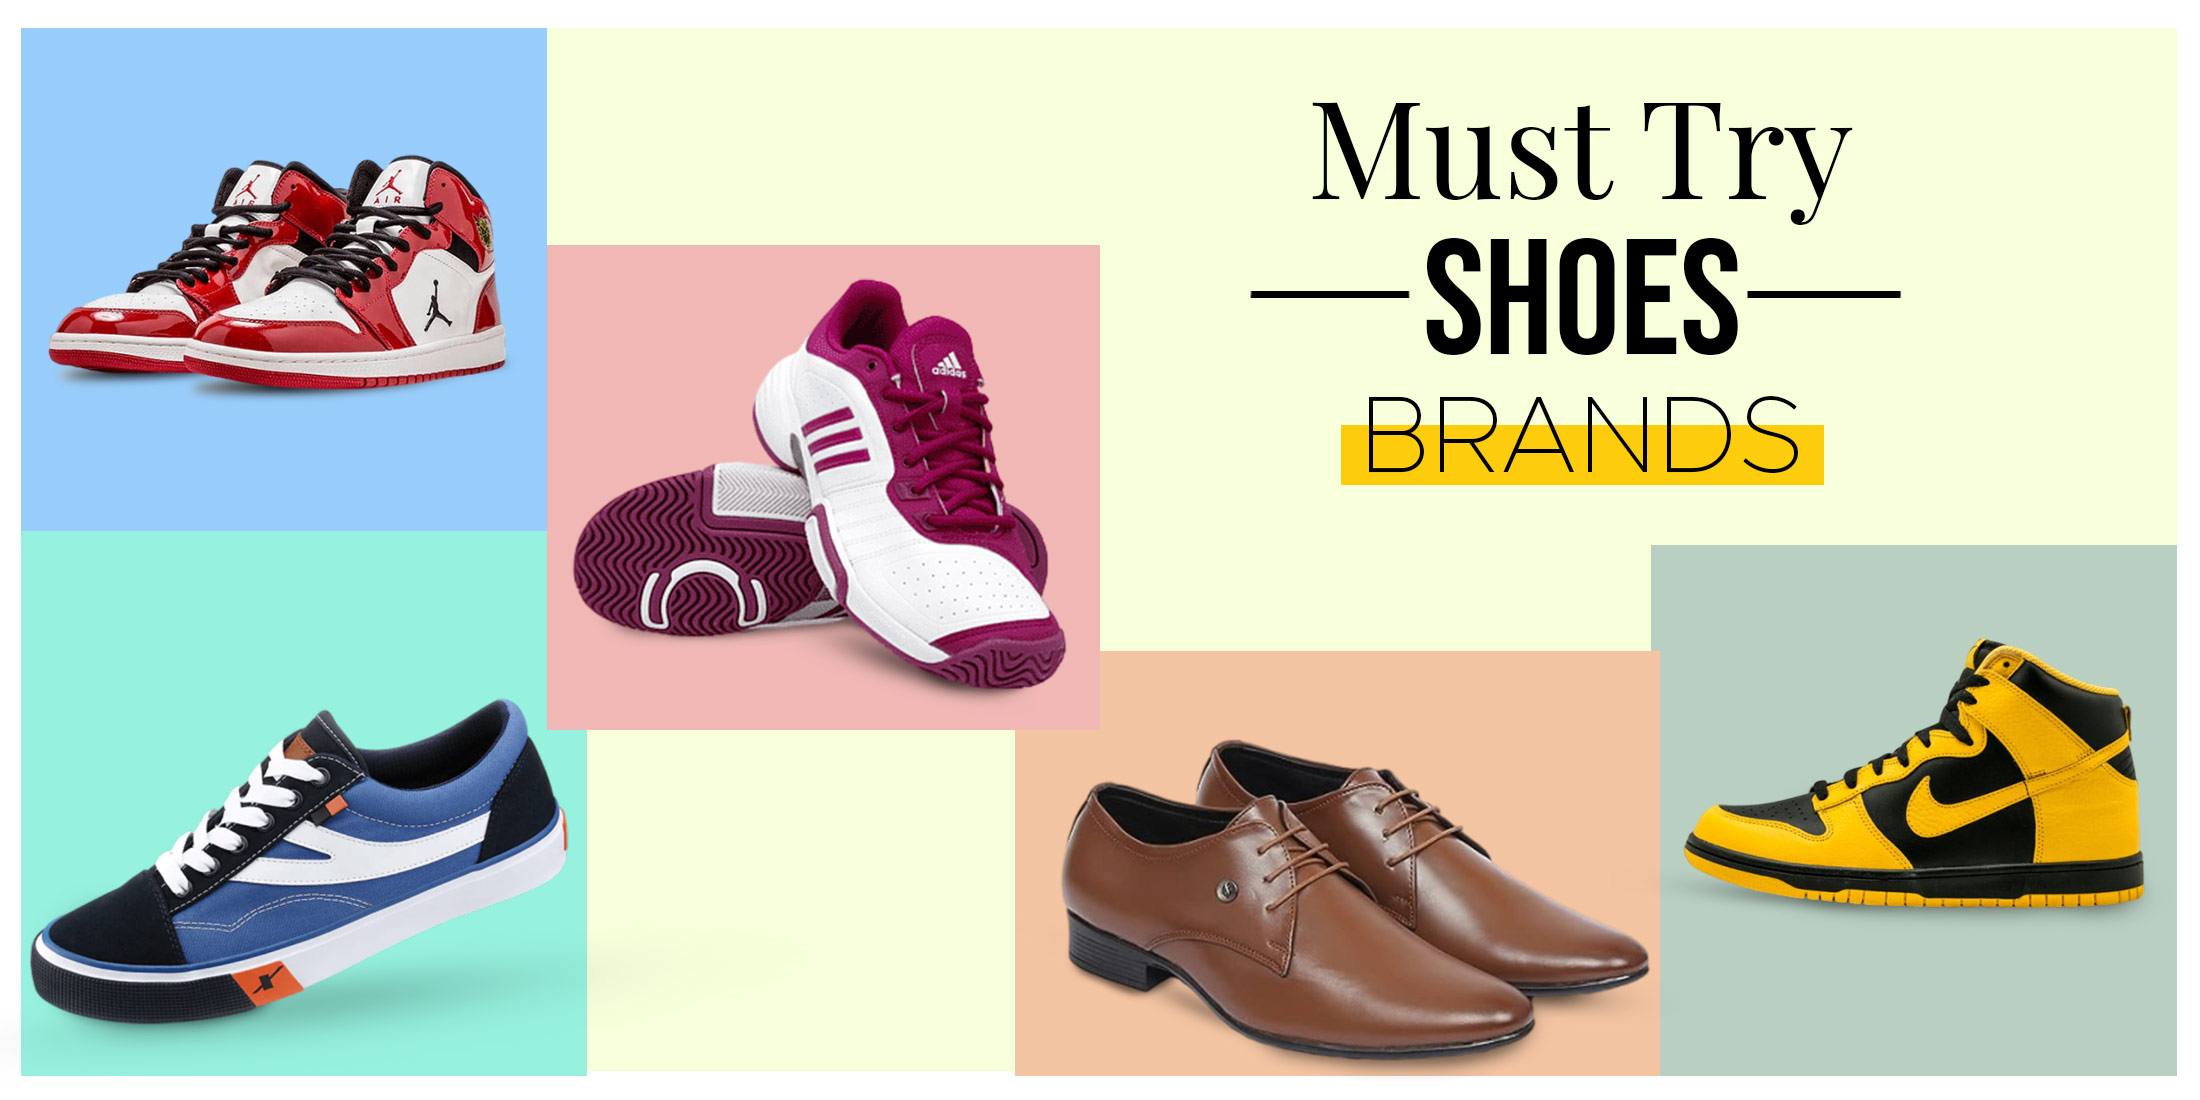 12 Best Shoe Brands in the World - Animas Marketing